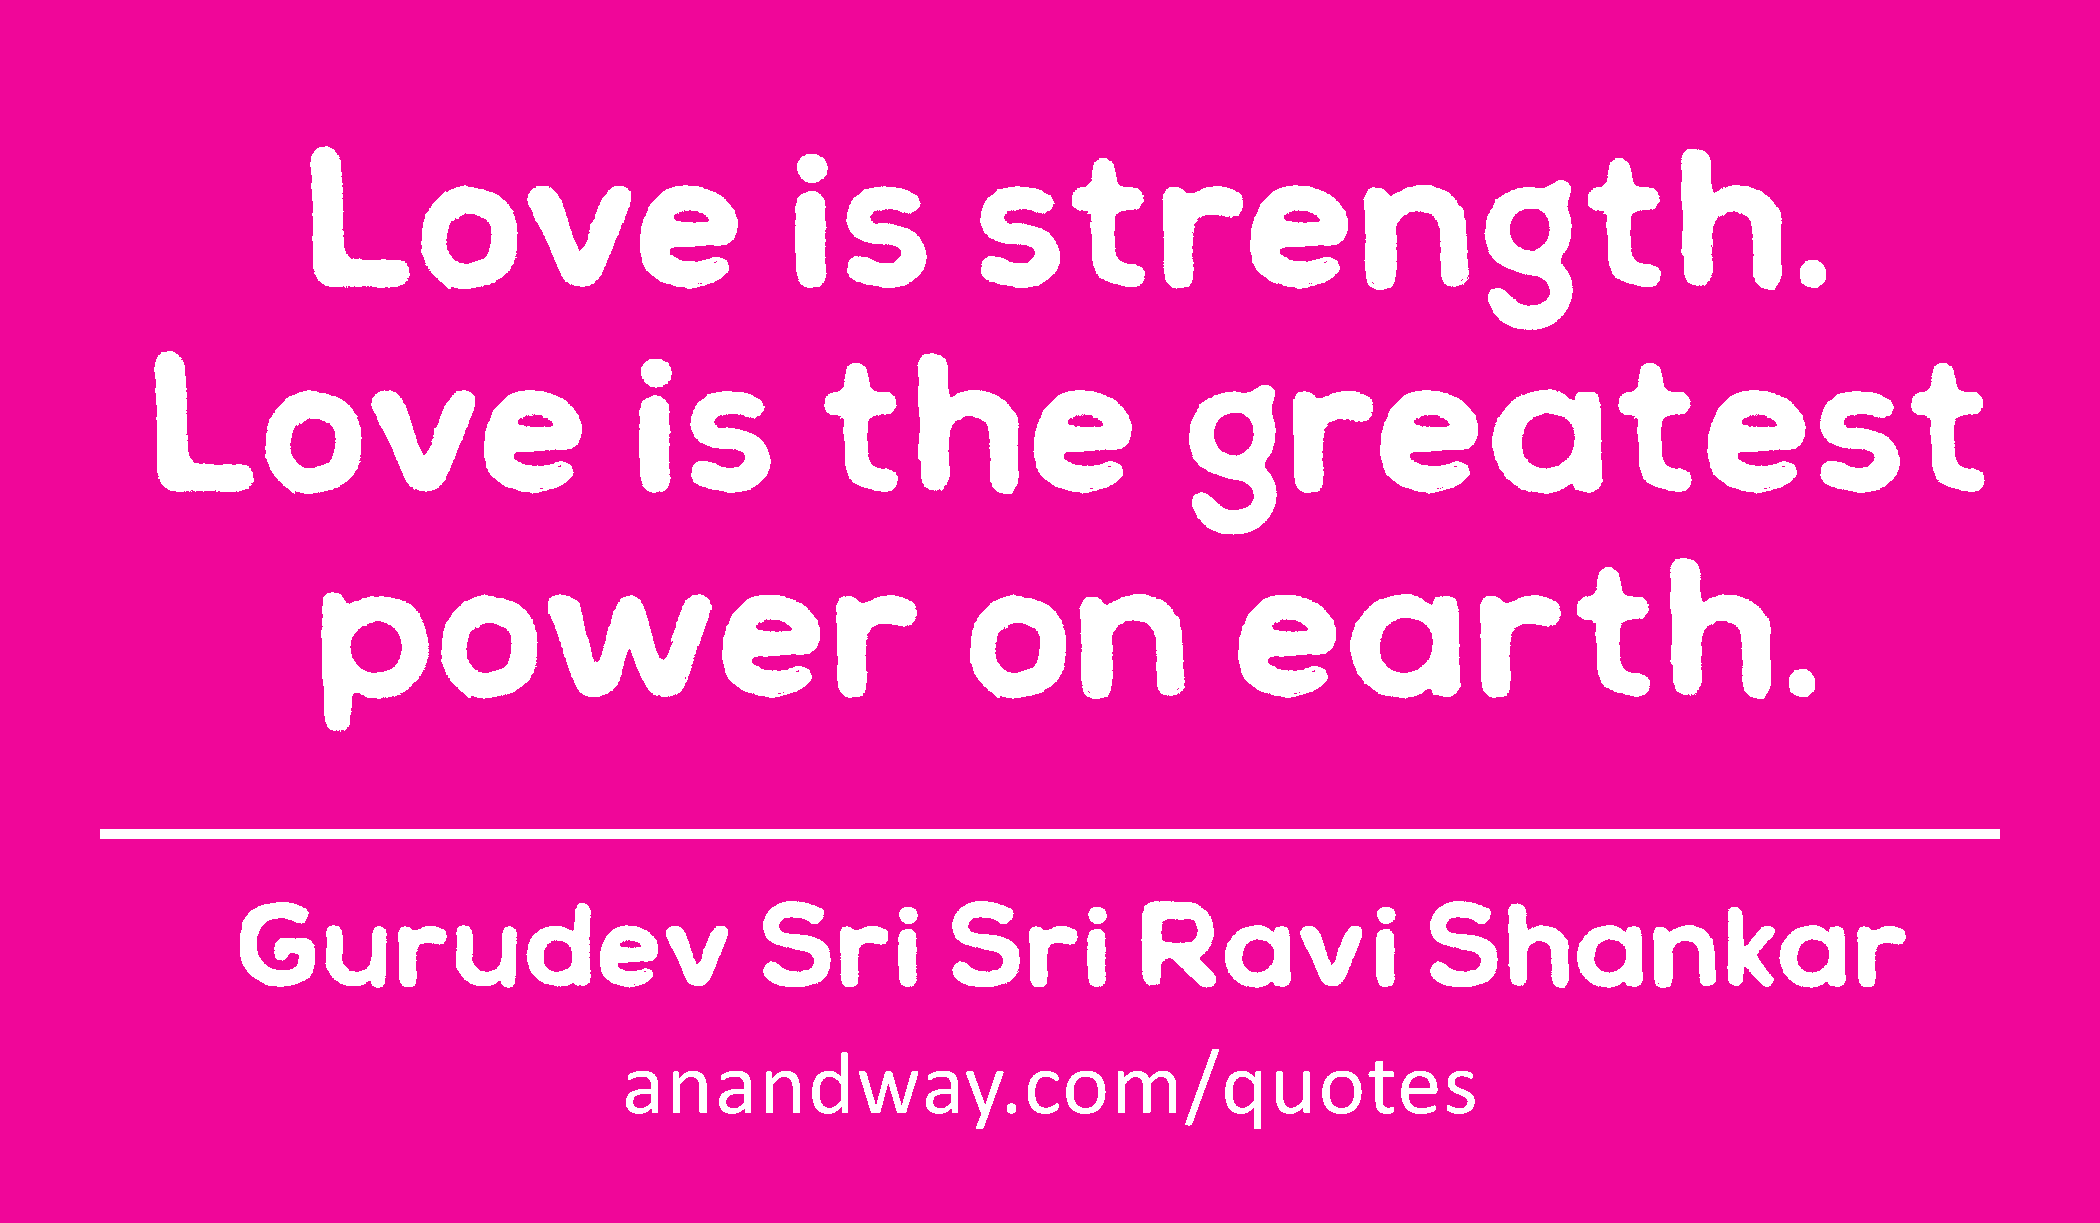 Love is strength. Love is the greatest power on earth. 
 -Gurudev Sri Sri Ravi Shankar